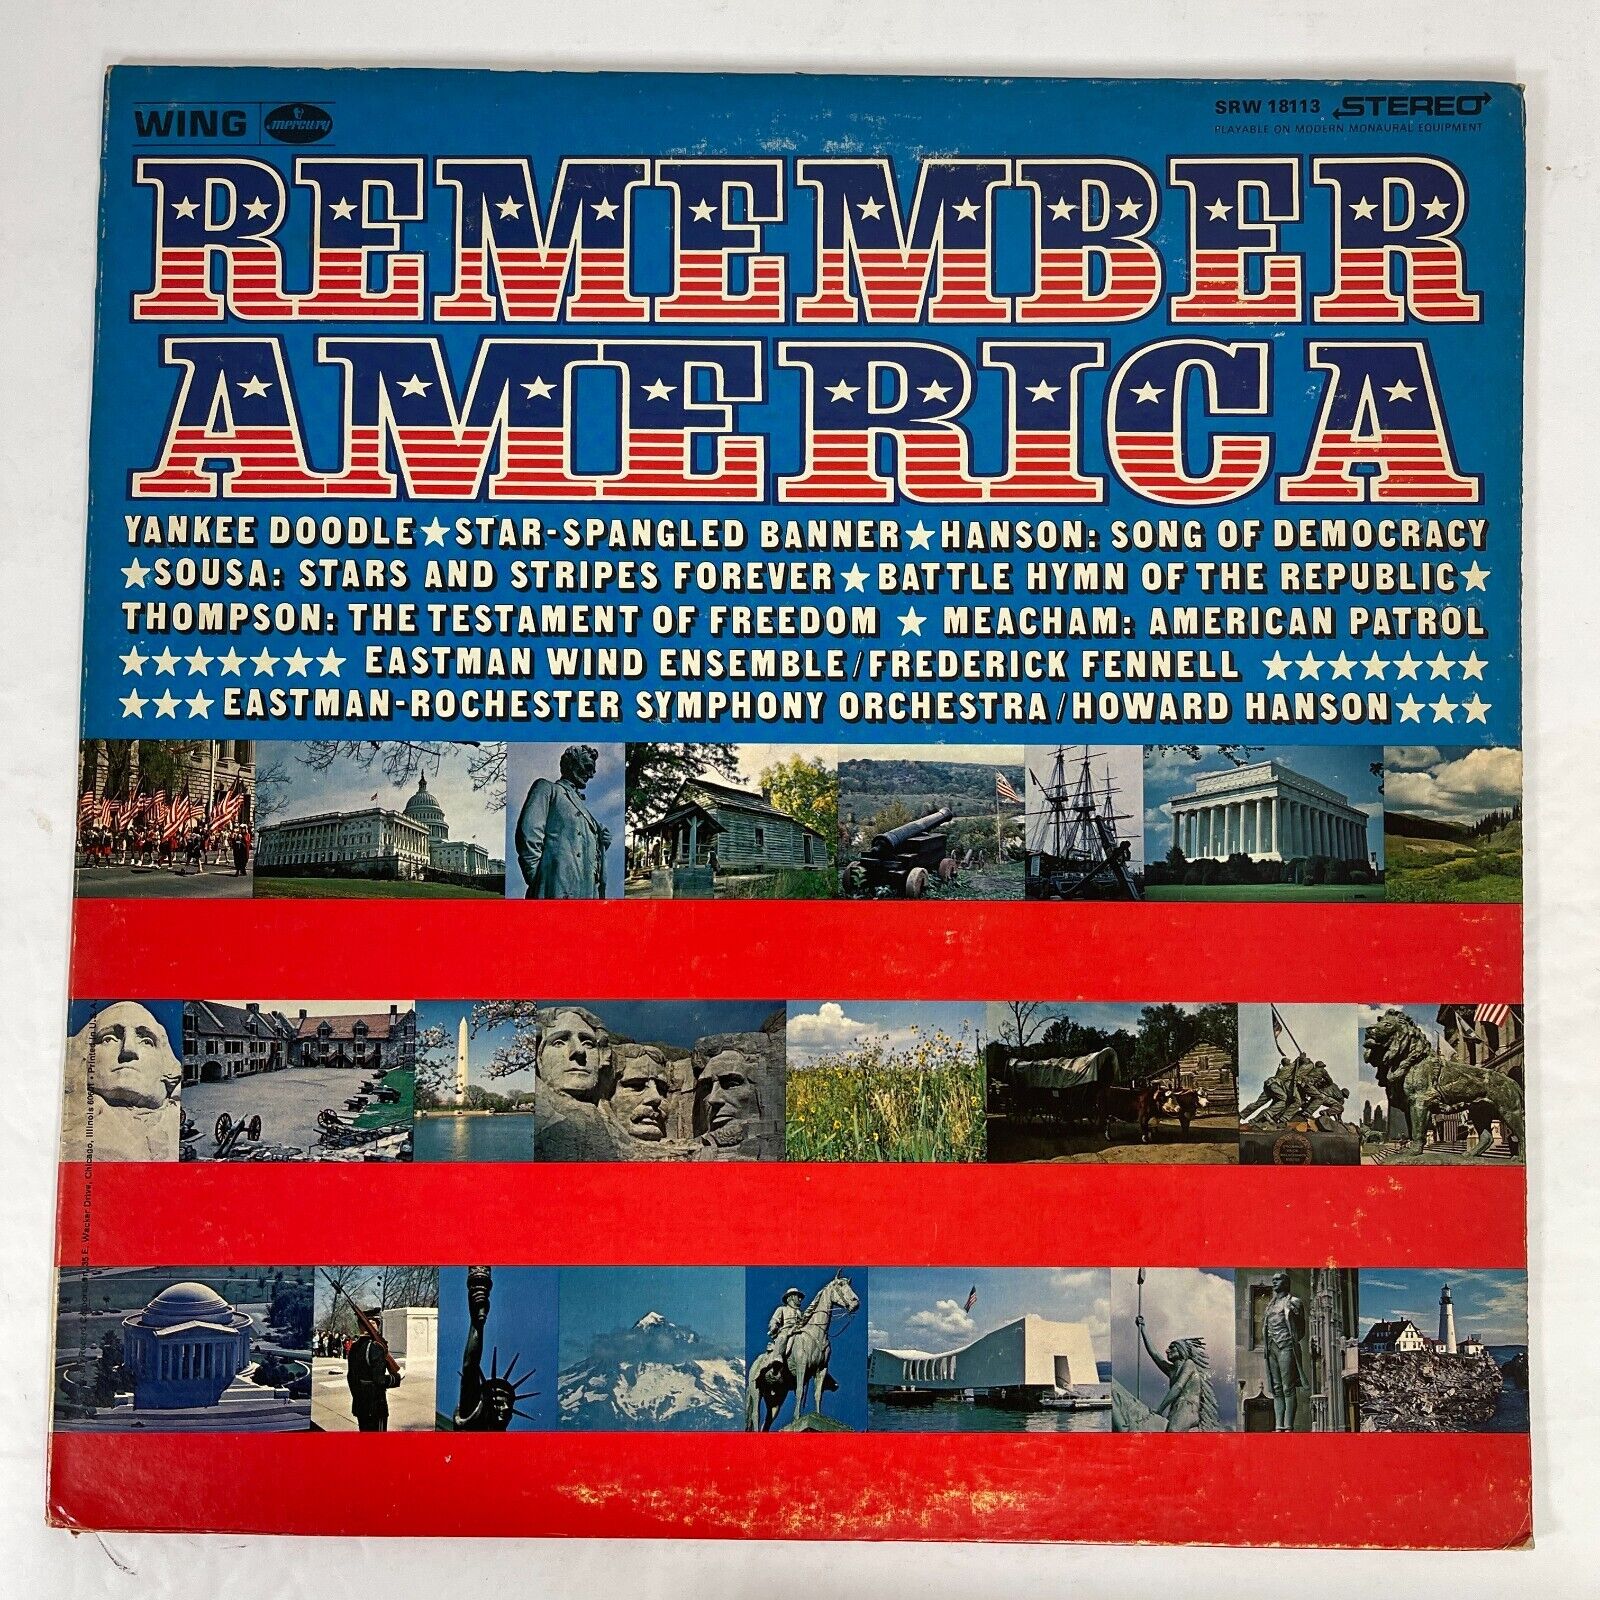 Remember America Various Artist LP, Vinyl Mercury – SRW 18113